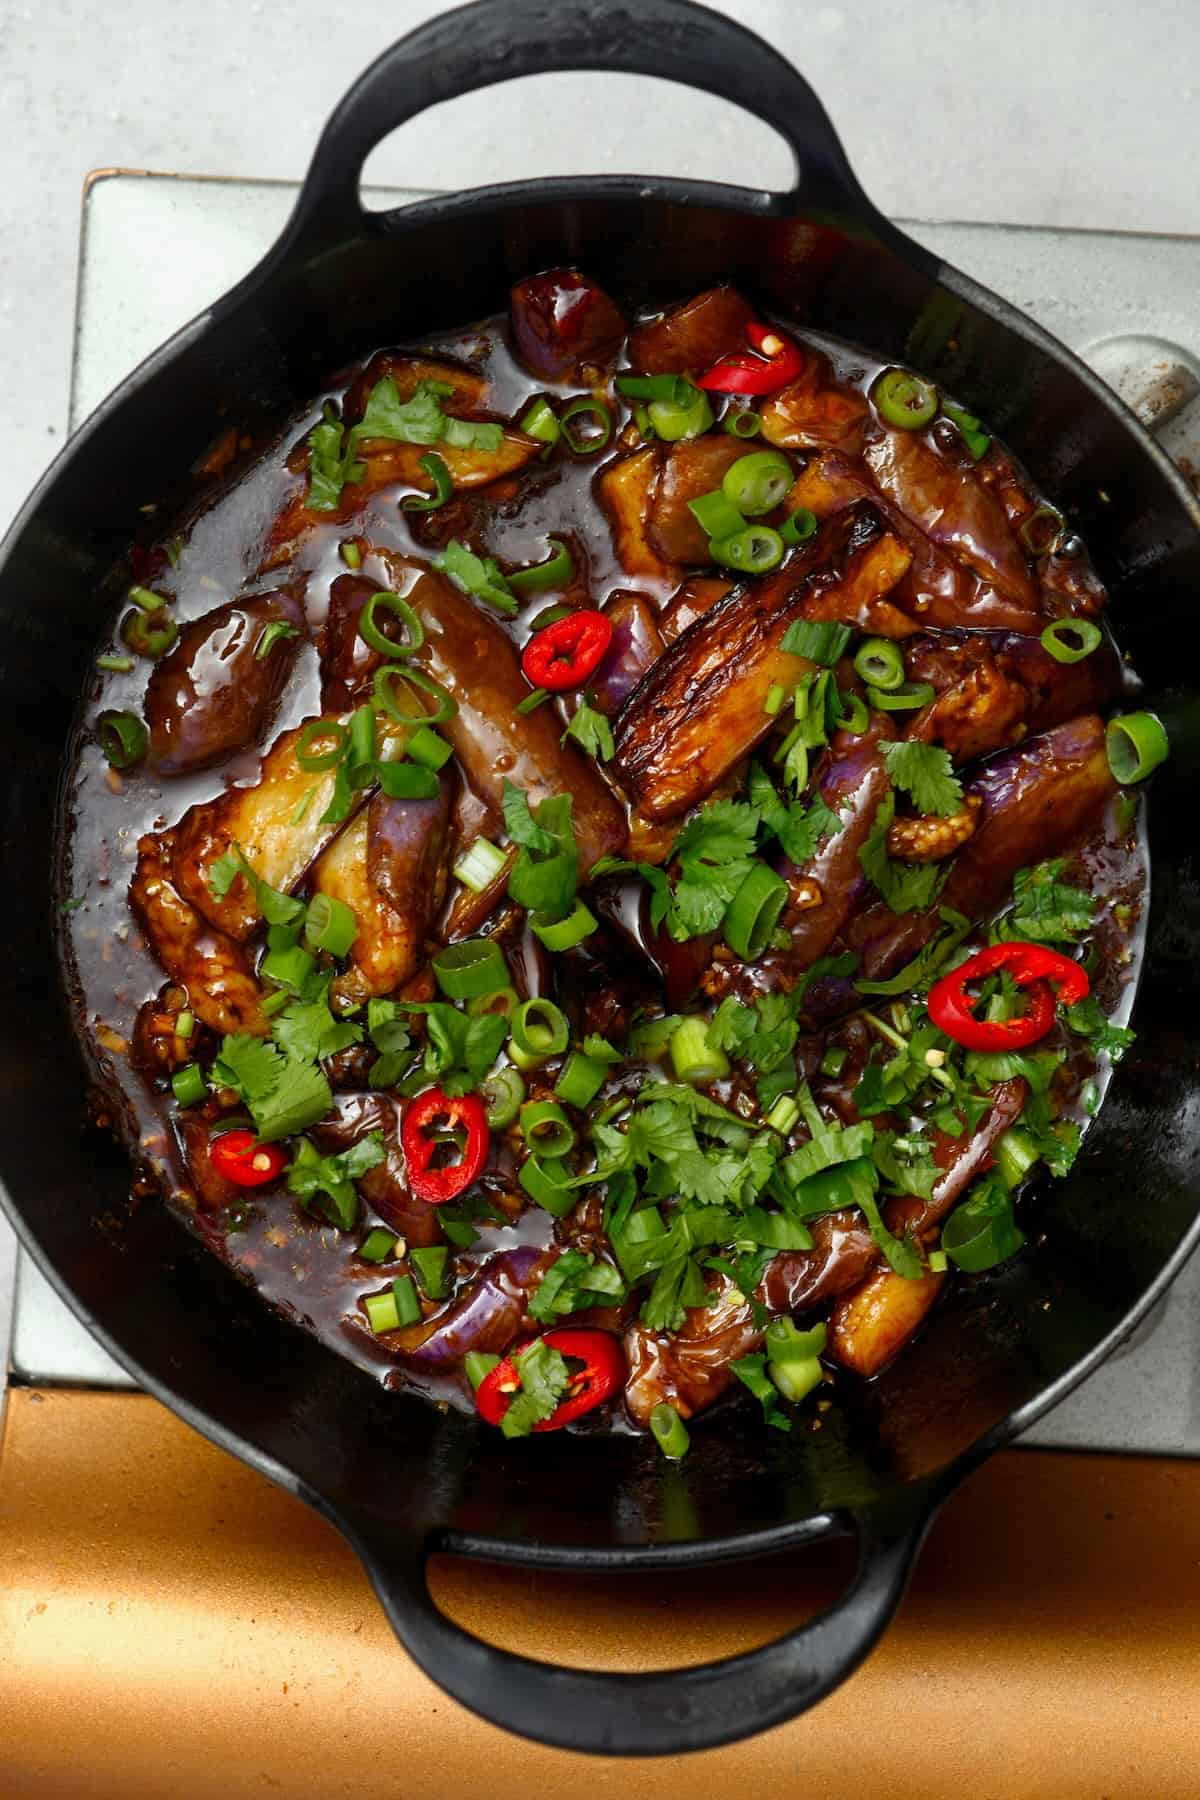 Chinese eggplant stir fry in a wok